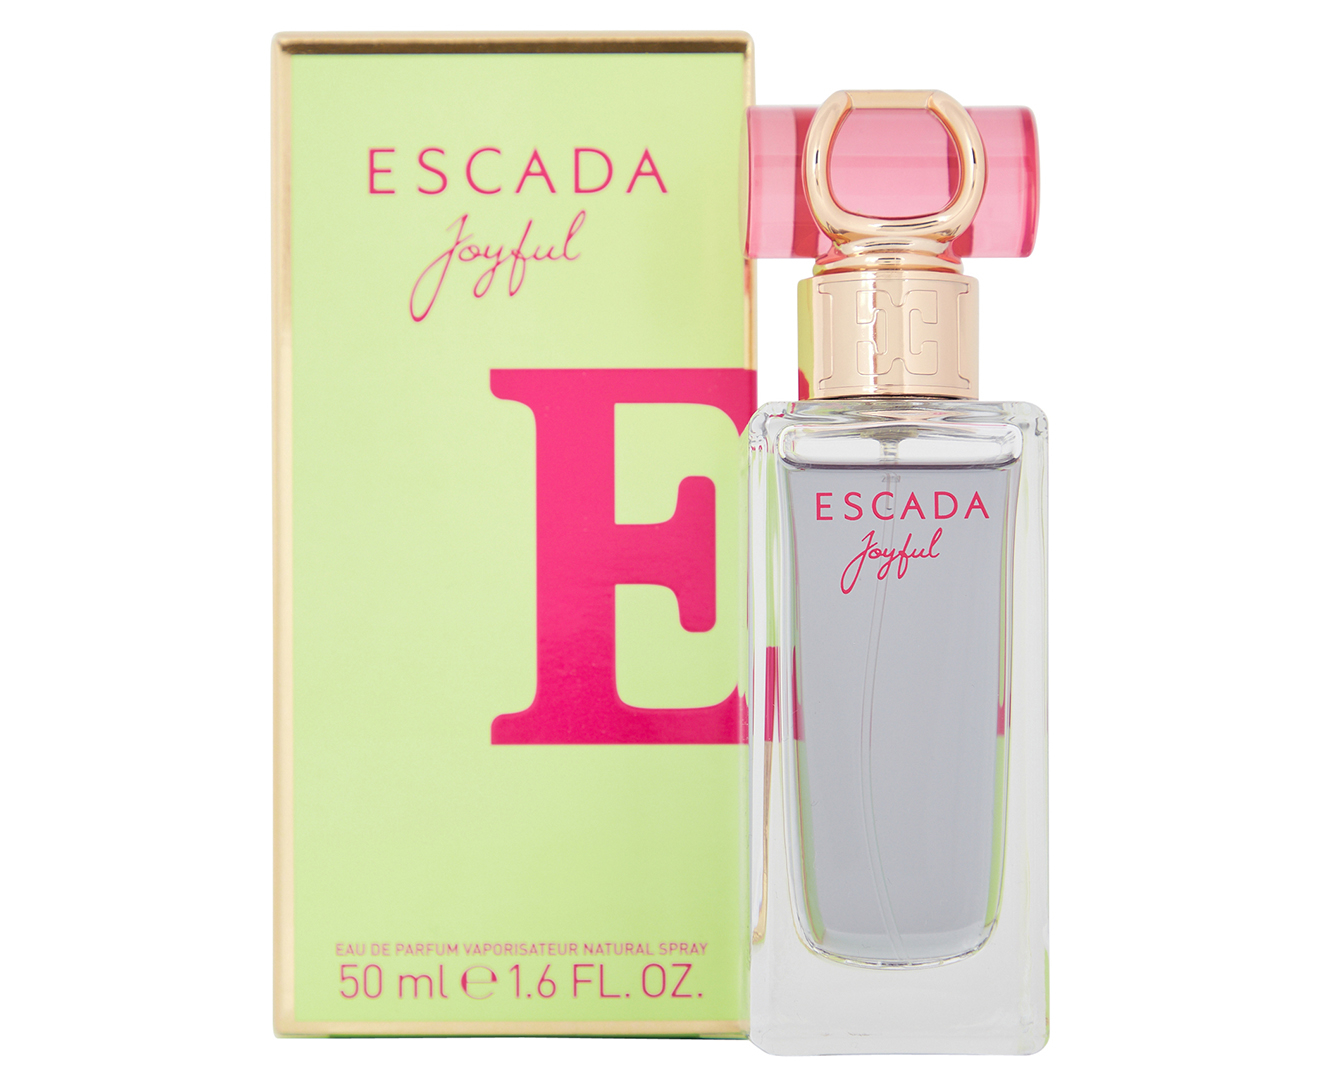 Escada Joyful For Women EDP Perfume 50mL | Catch.com.au